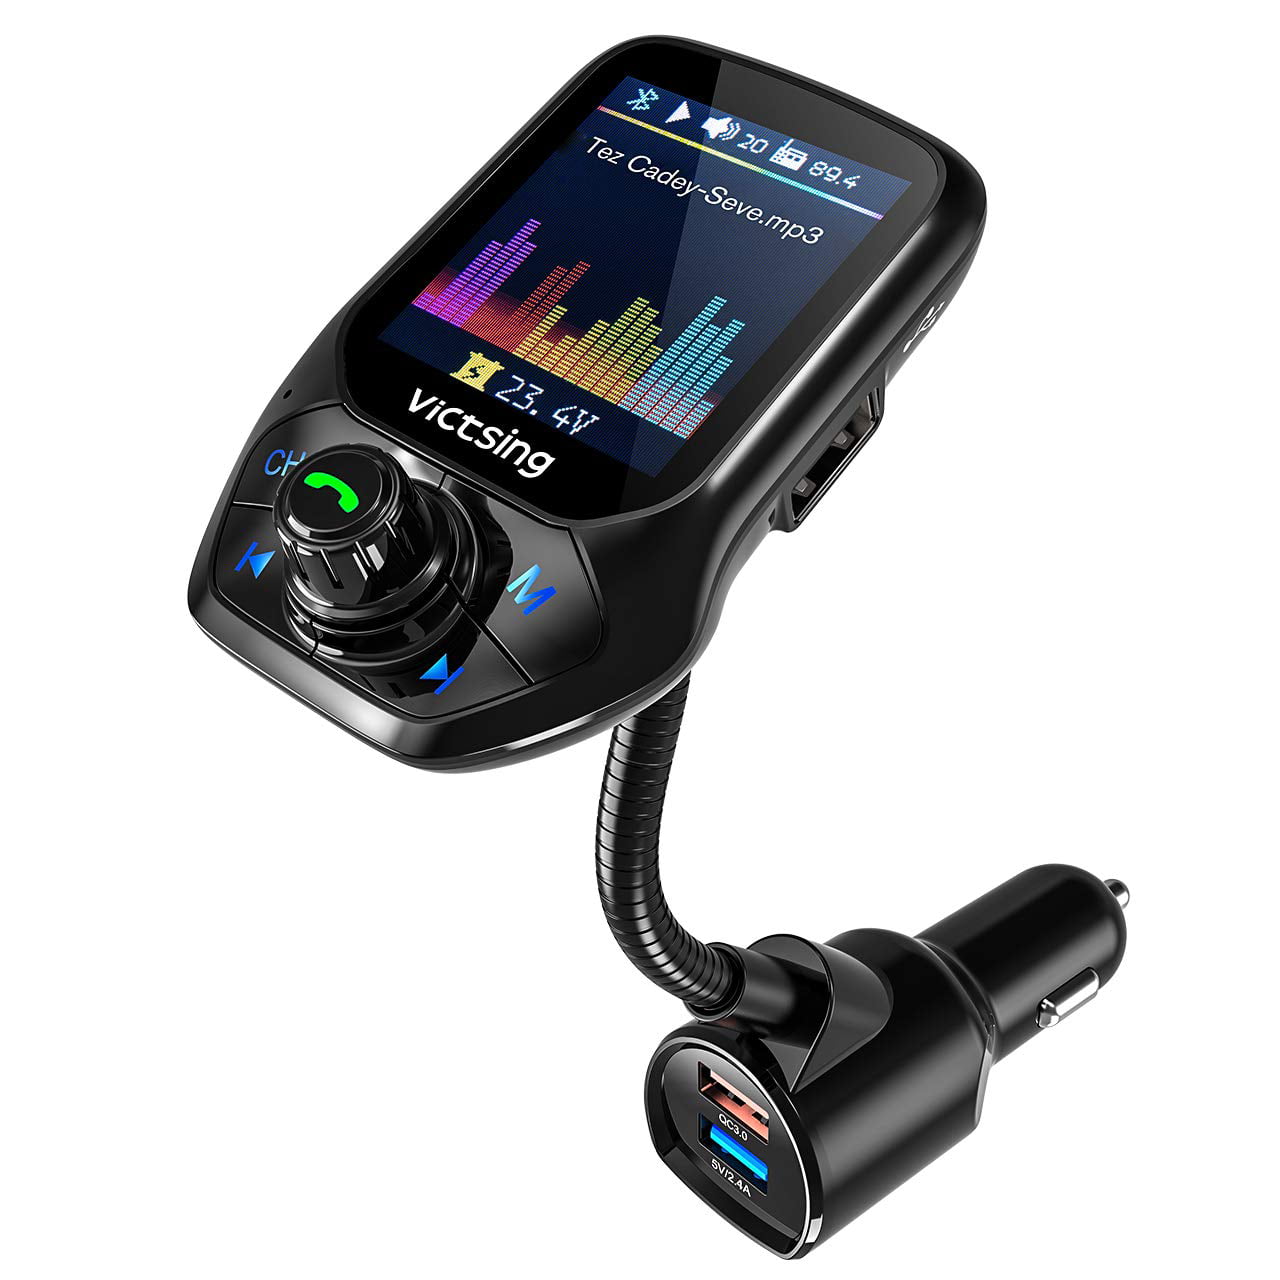 KM22 Silver Nulaxy Bluetooth Car FM Transmitter Wireless Audio Adapter Receiver Handsfree Voltmeter Car Kit TF Card AUX USB 1.44 Display On/Off Button EQ Folder Play Mode 